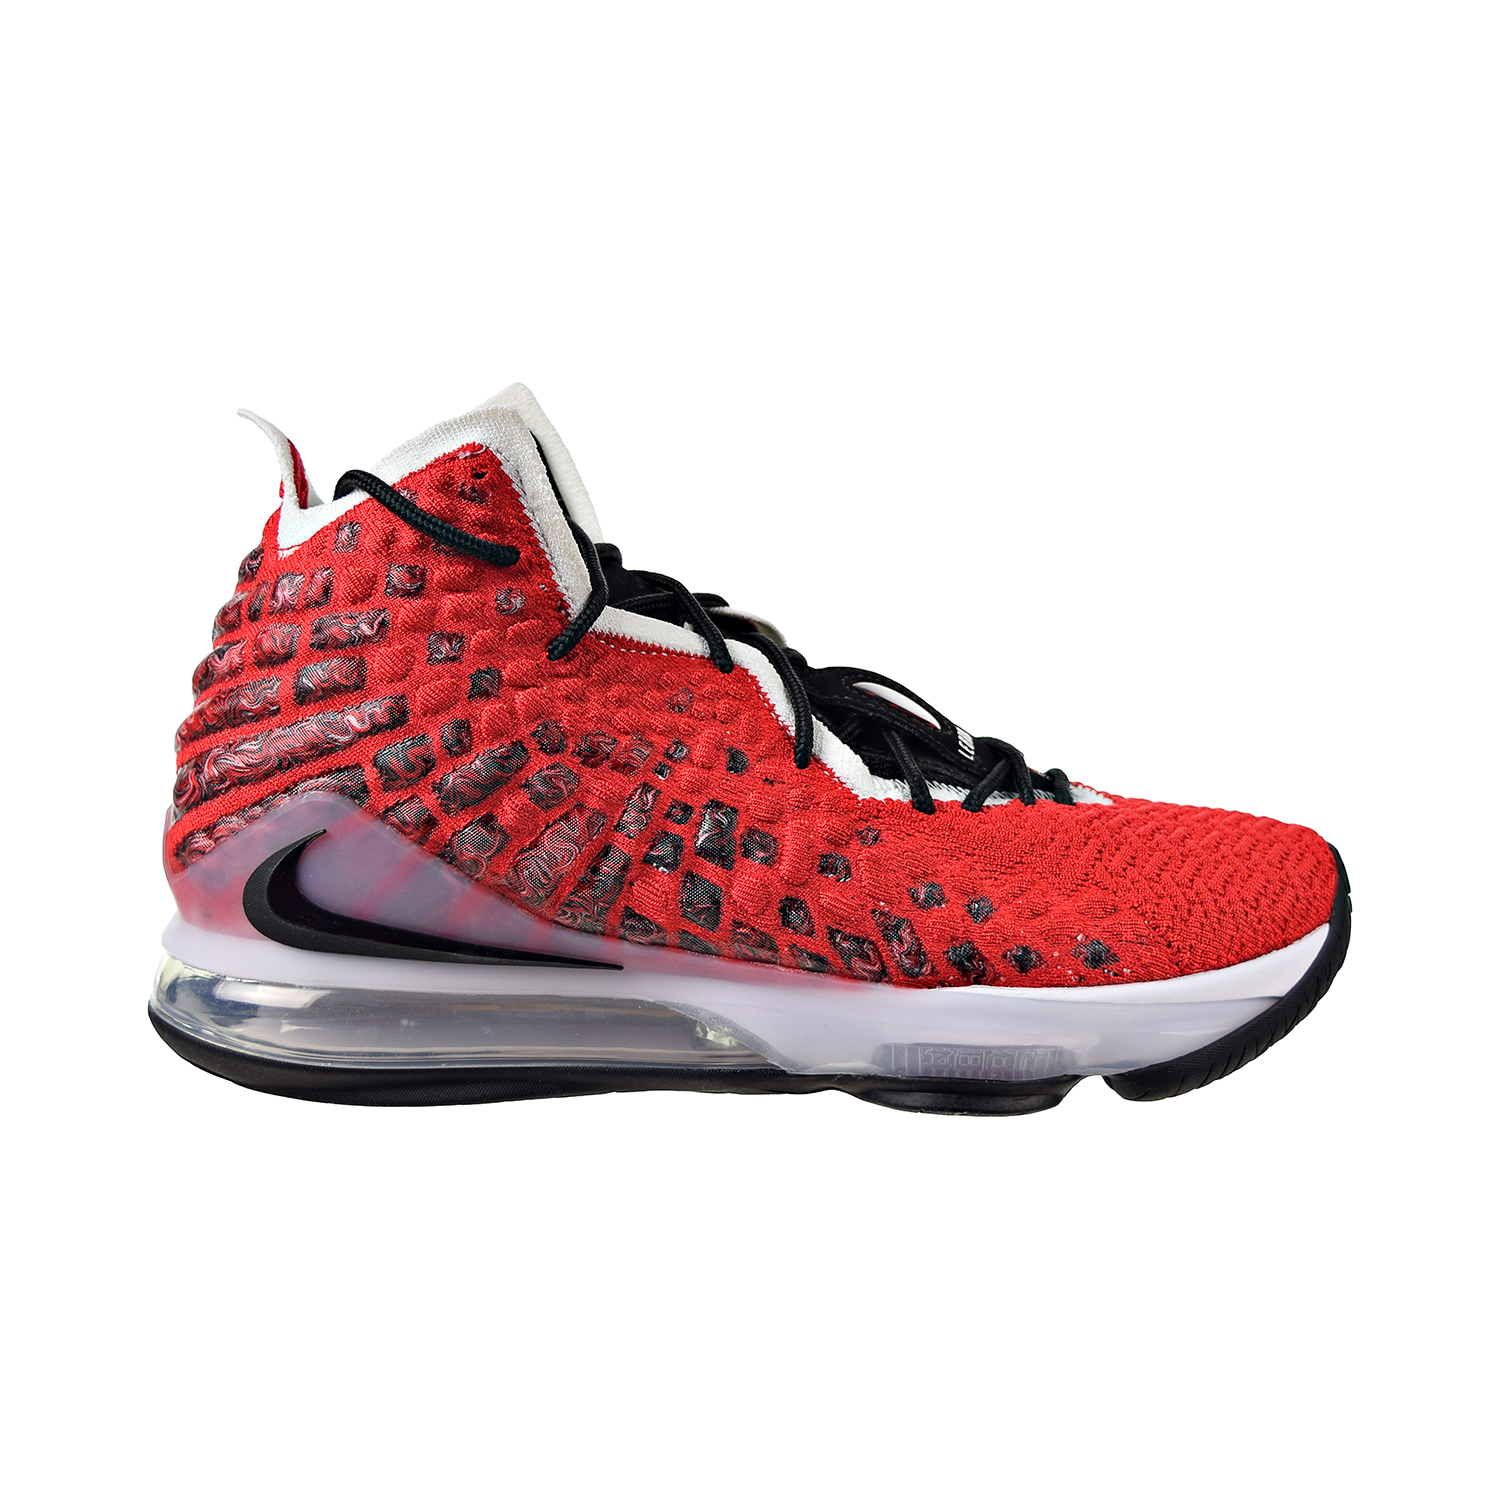 Nike LeBron 17 "Uptempo" Men's Basketball Shoes University Red-Black bq3177-601 - image 1 of 6